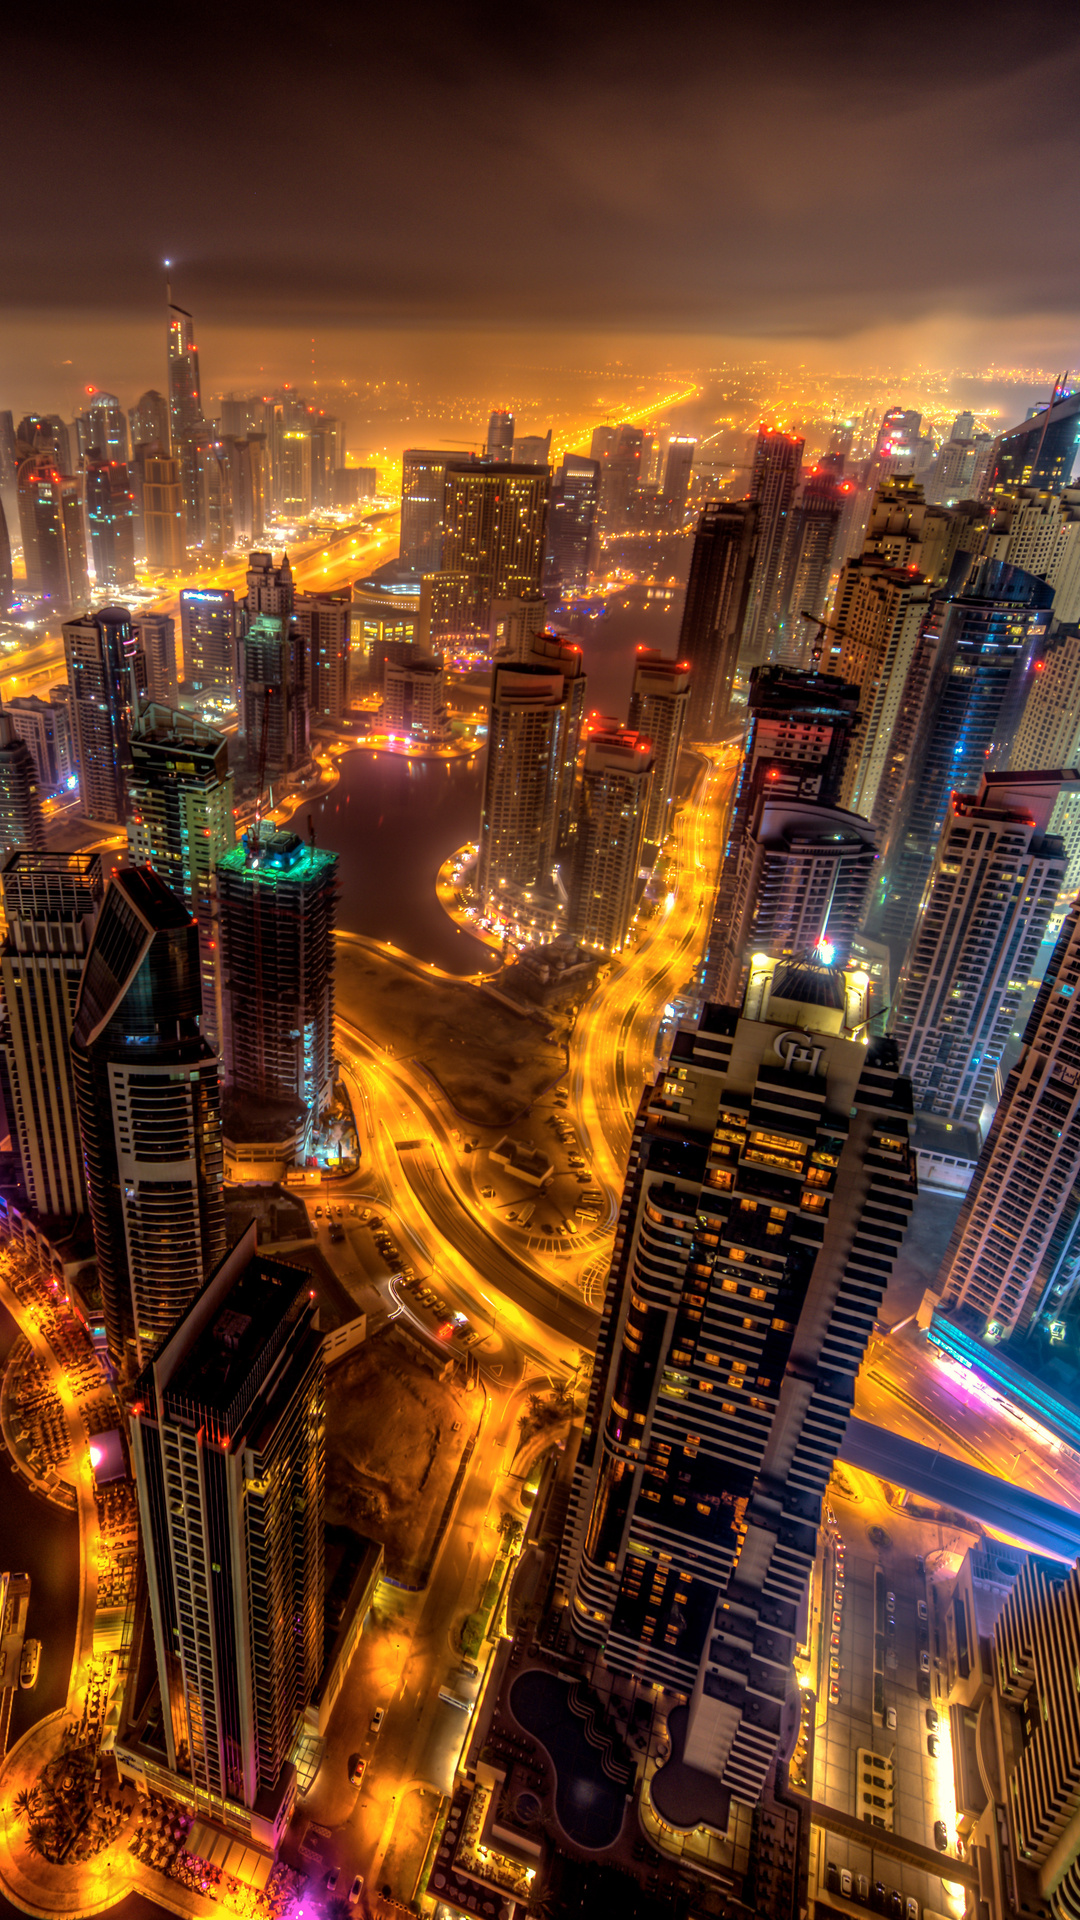 1080x1920 Dubai Buildings Night Lights Top View 8k Iphone 7,6s,6 Plus